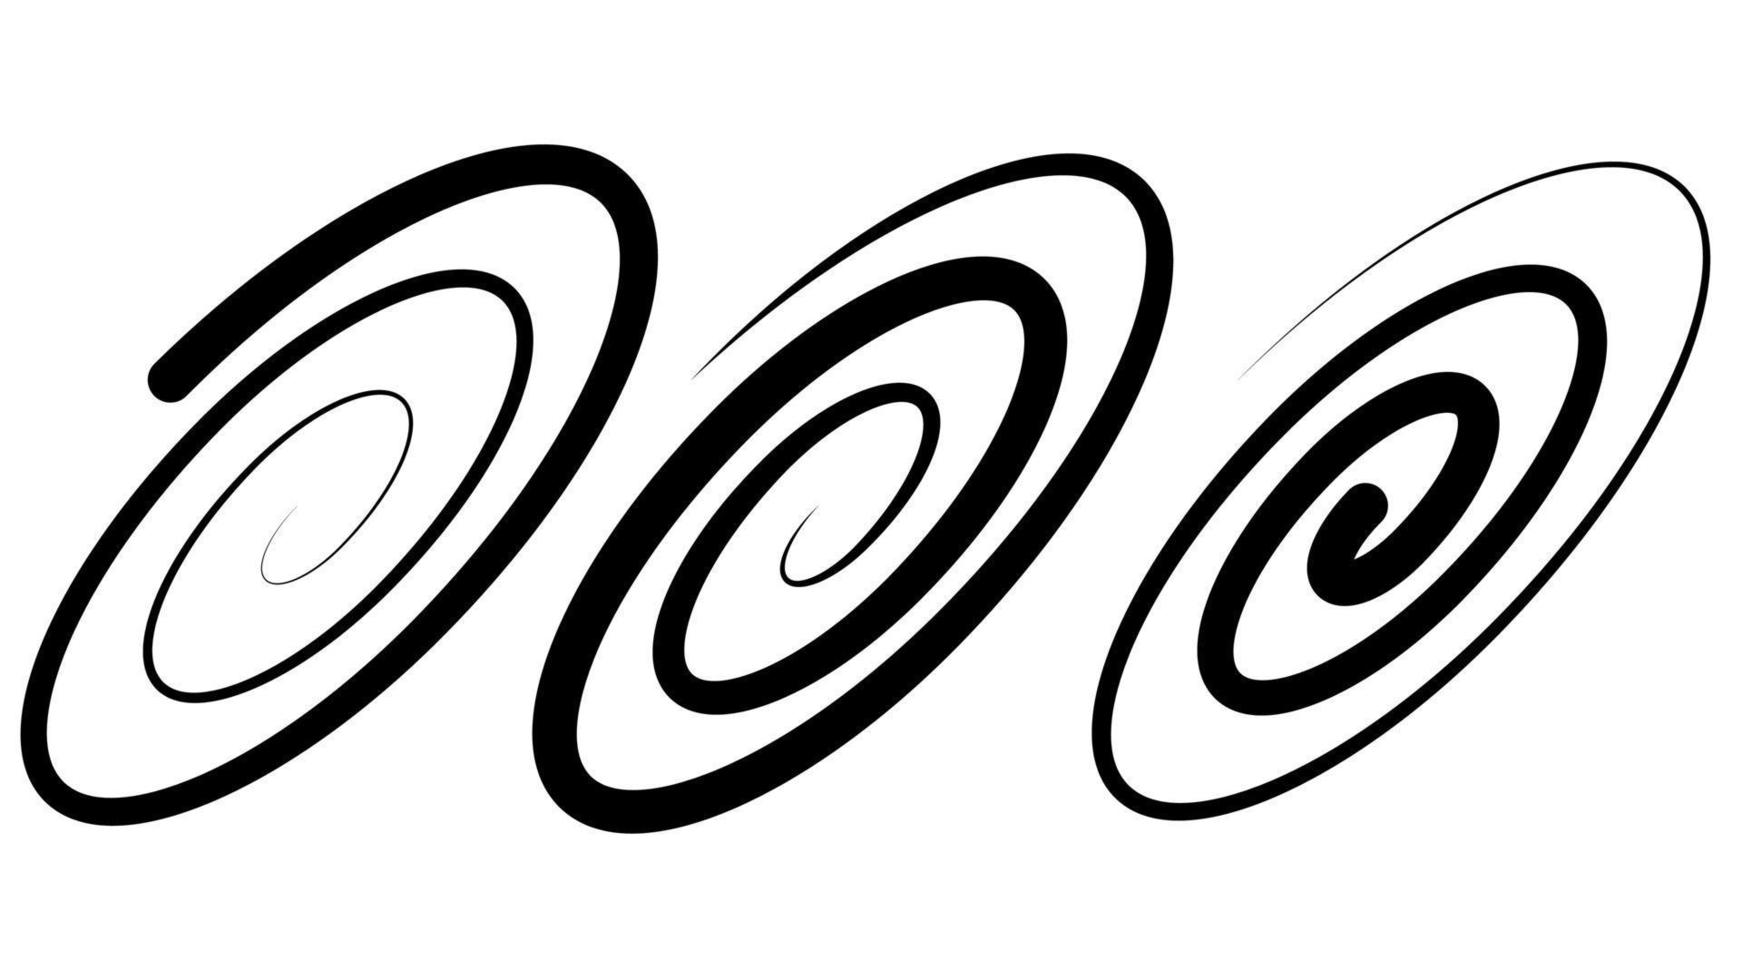 oval espiral logotipo, círculo vórtice linha, criativo geométrico forma placa vetor